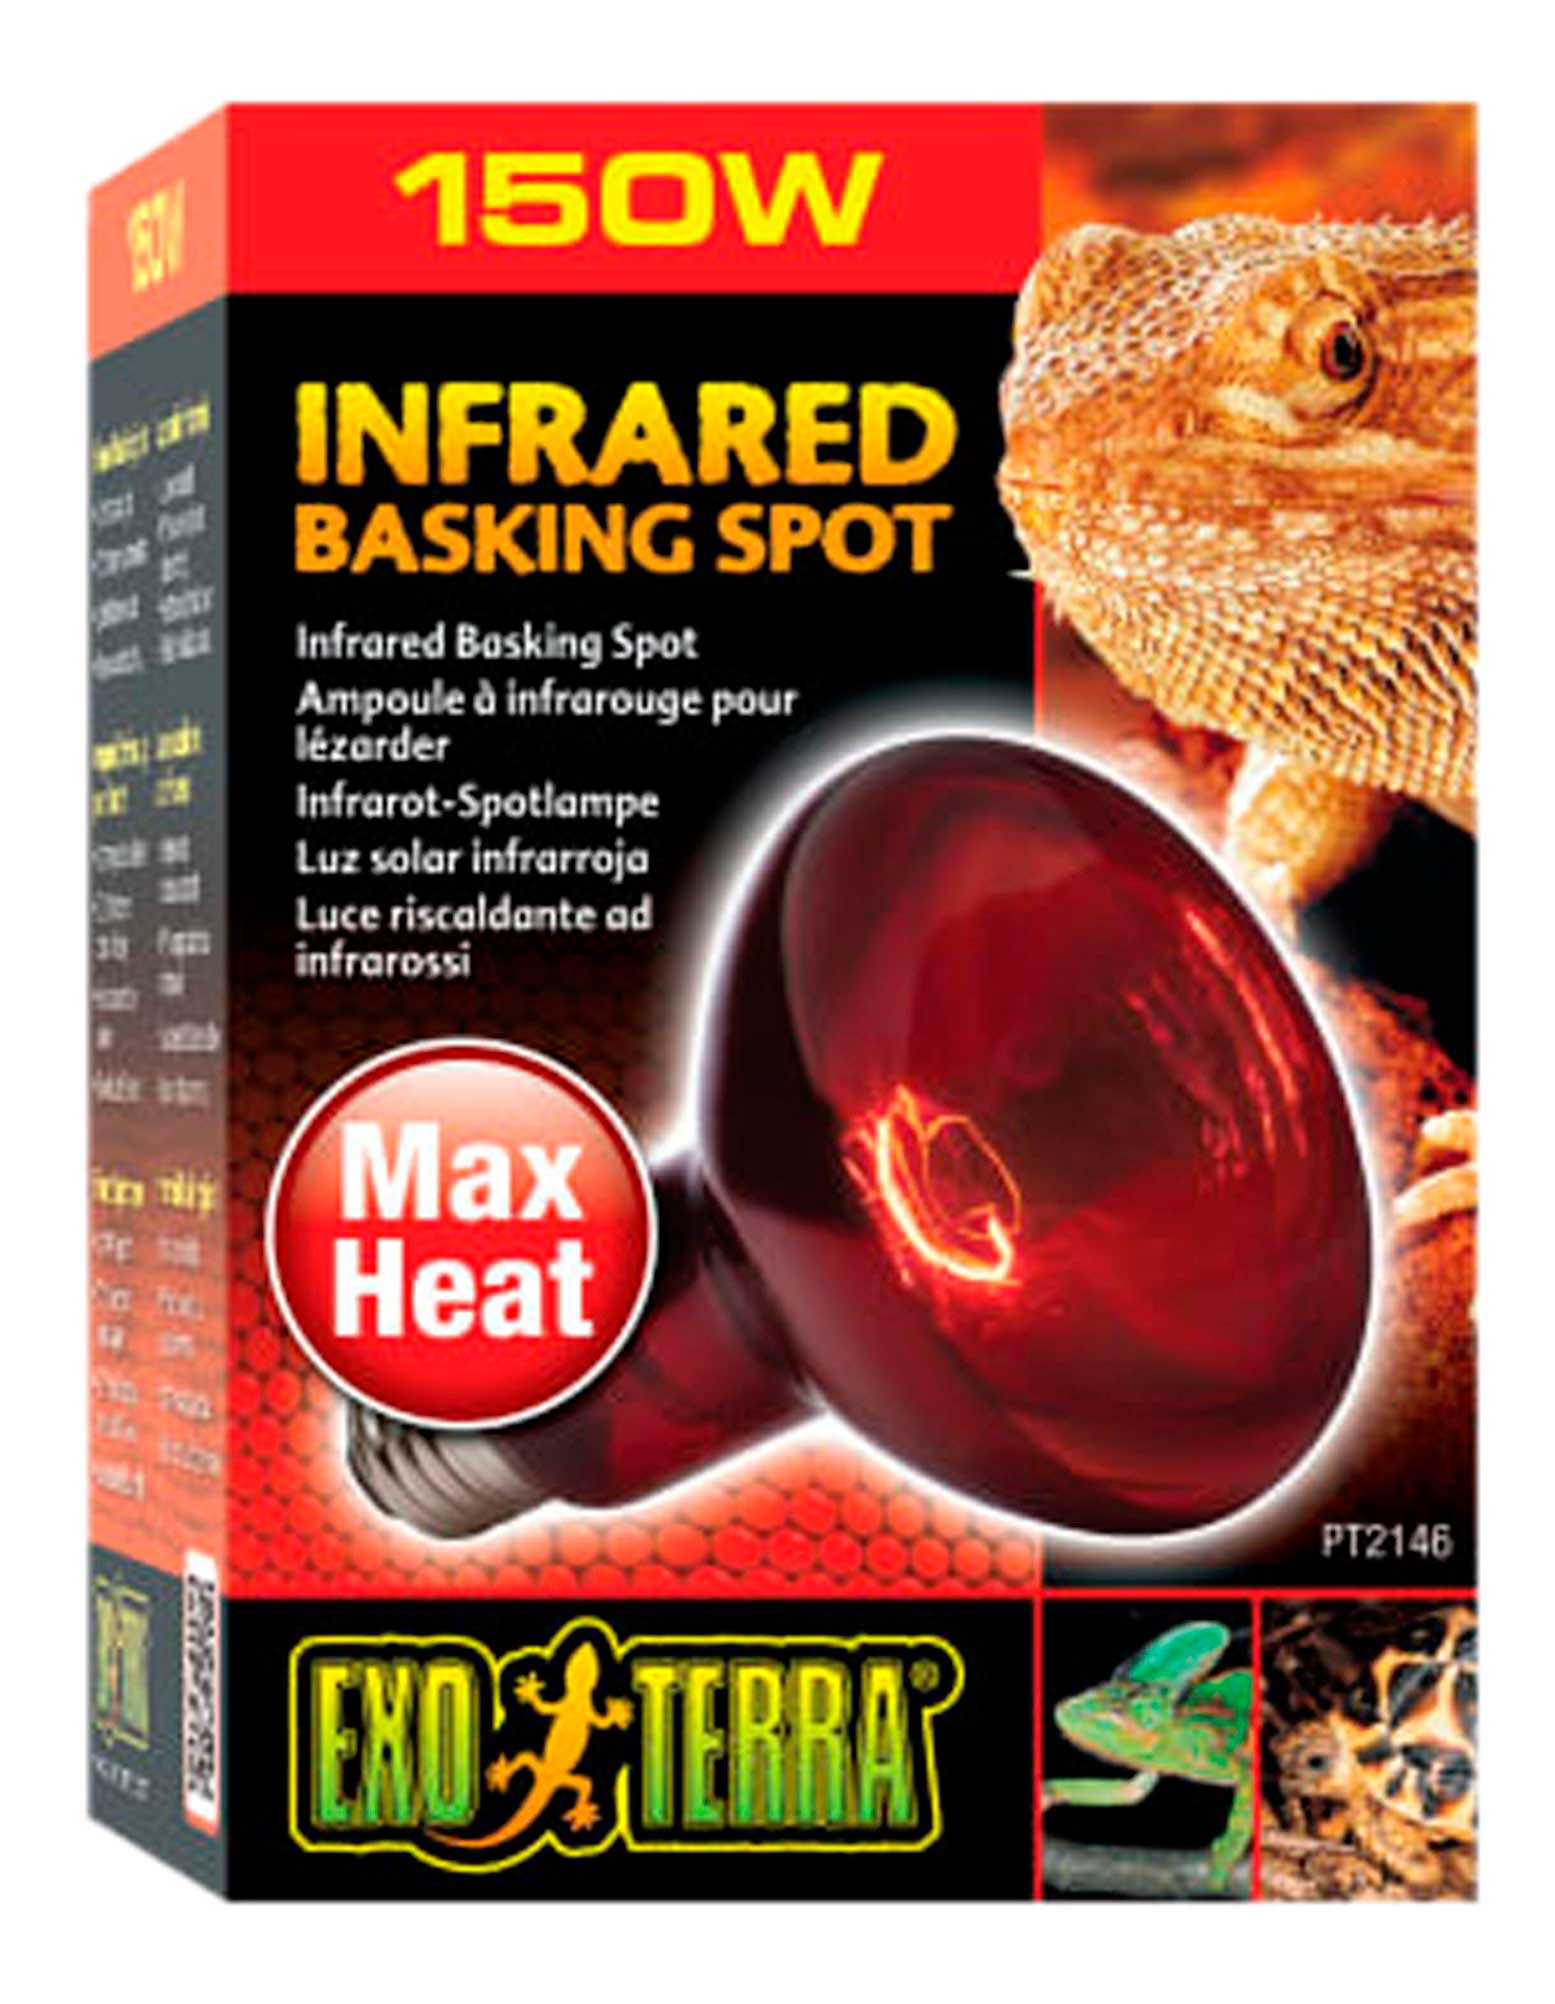 Exo Terra Reptile Heat/light Basking Infrared Spot 150w 1ea